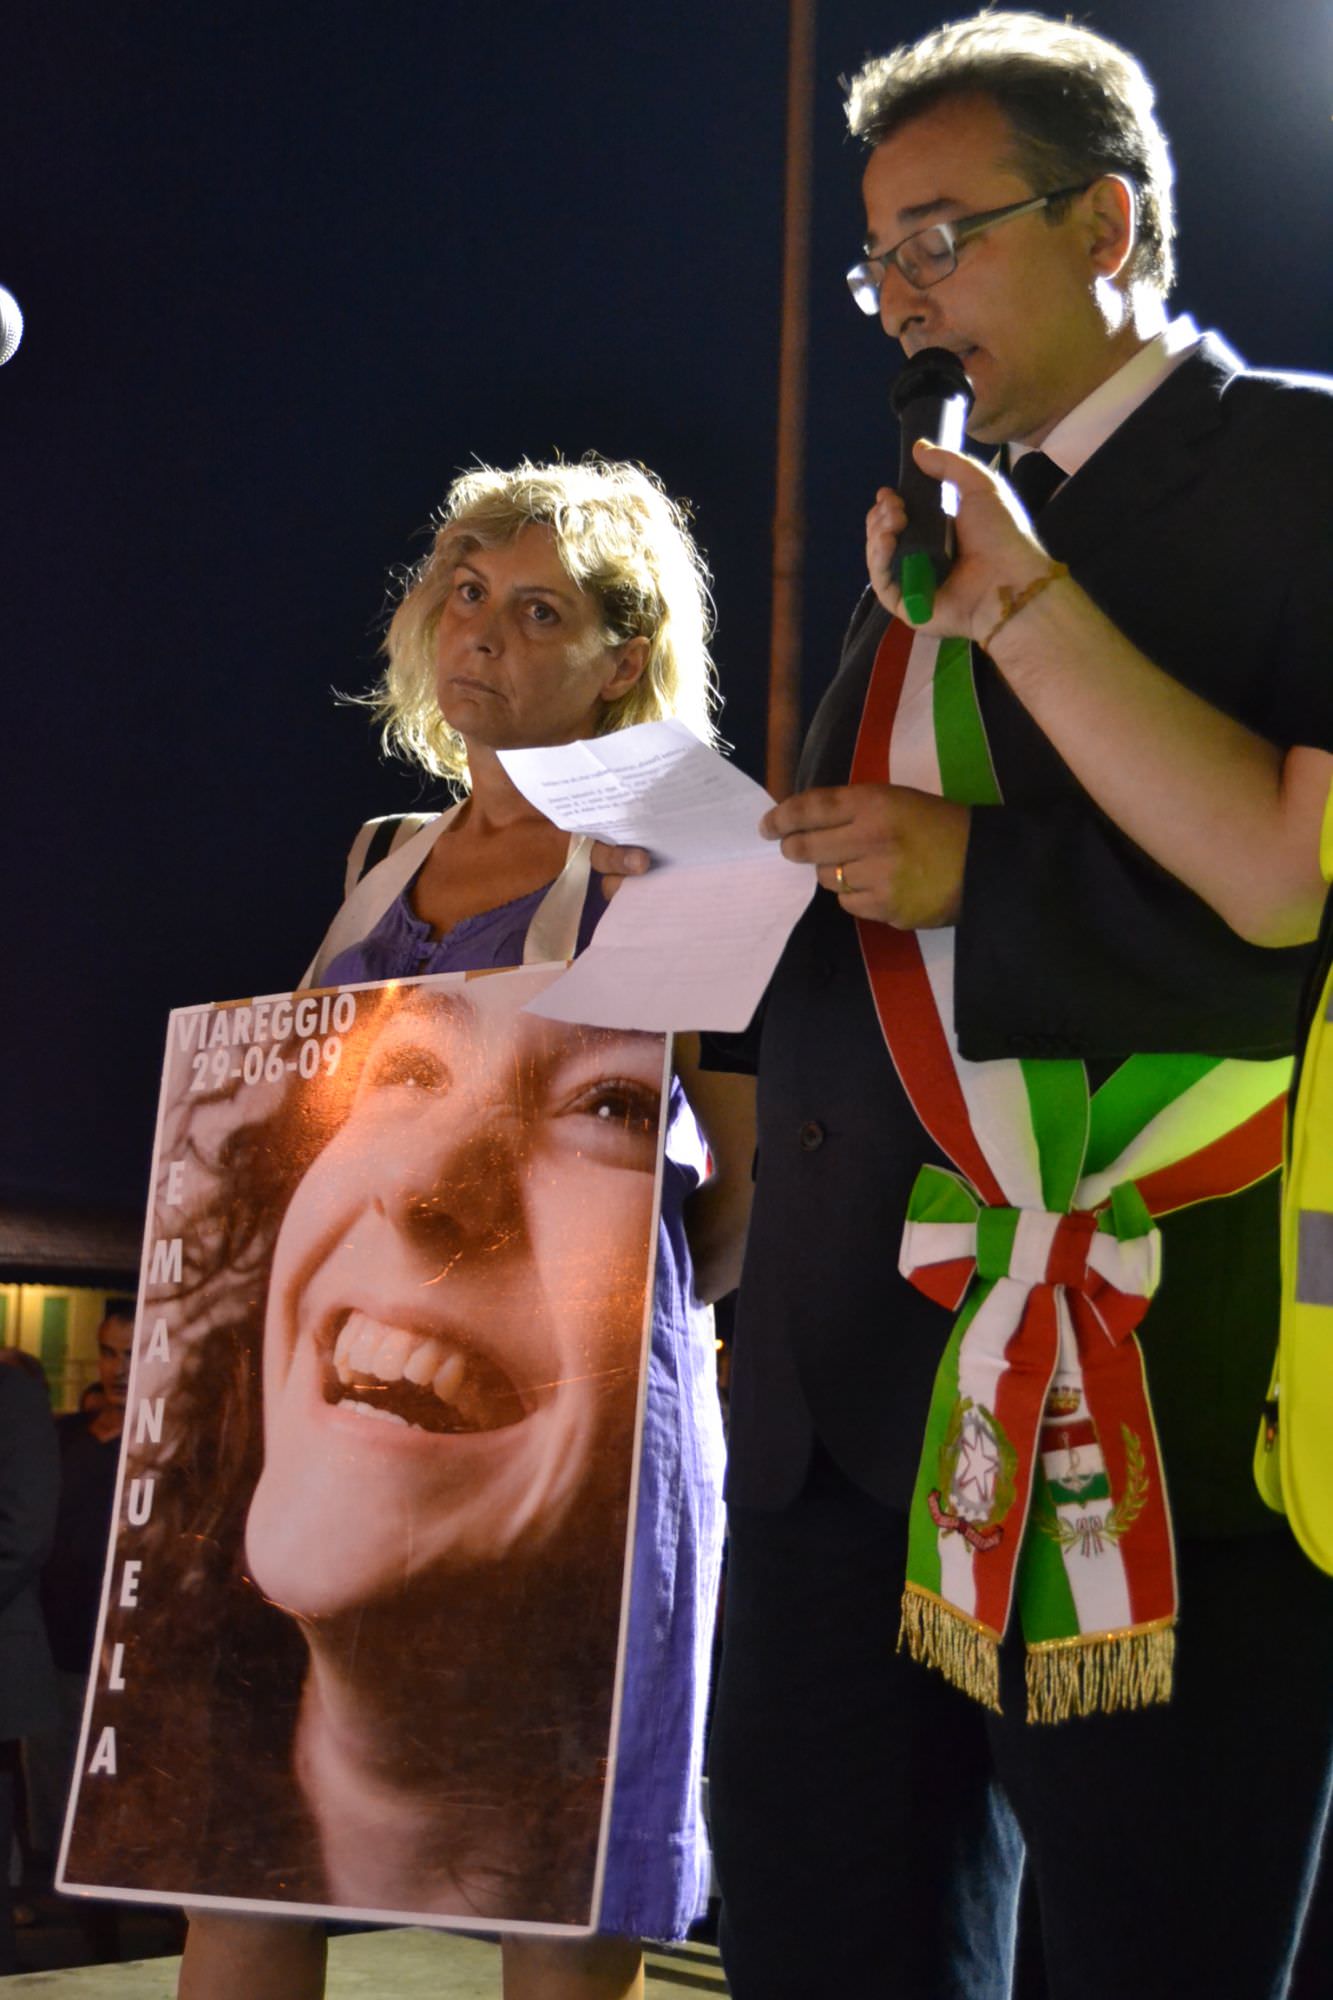 “Solidarietà a Daniela Rombi, querelata da Monciatti”